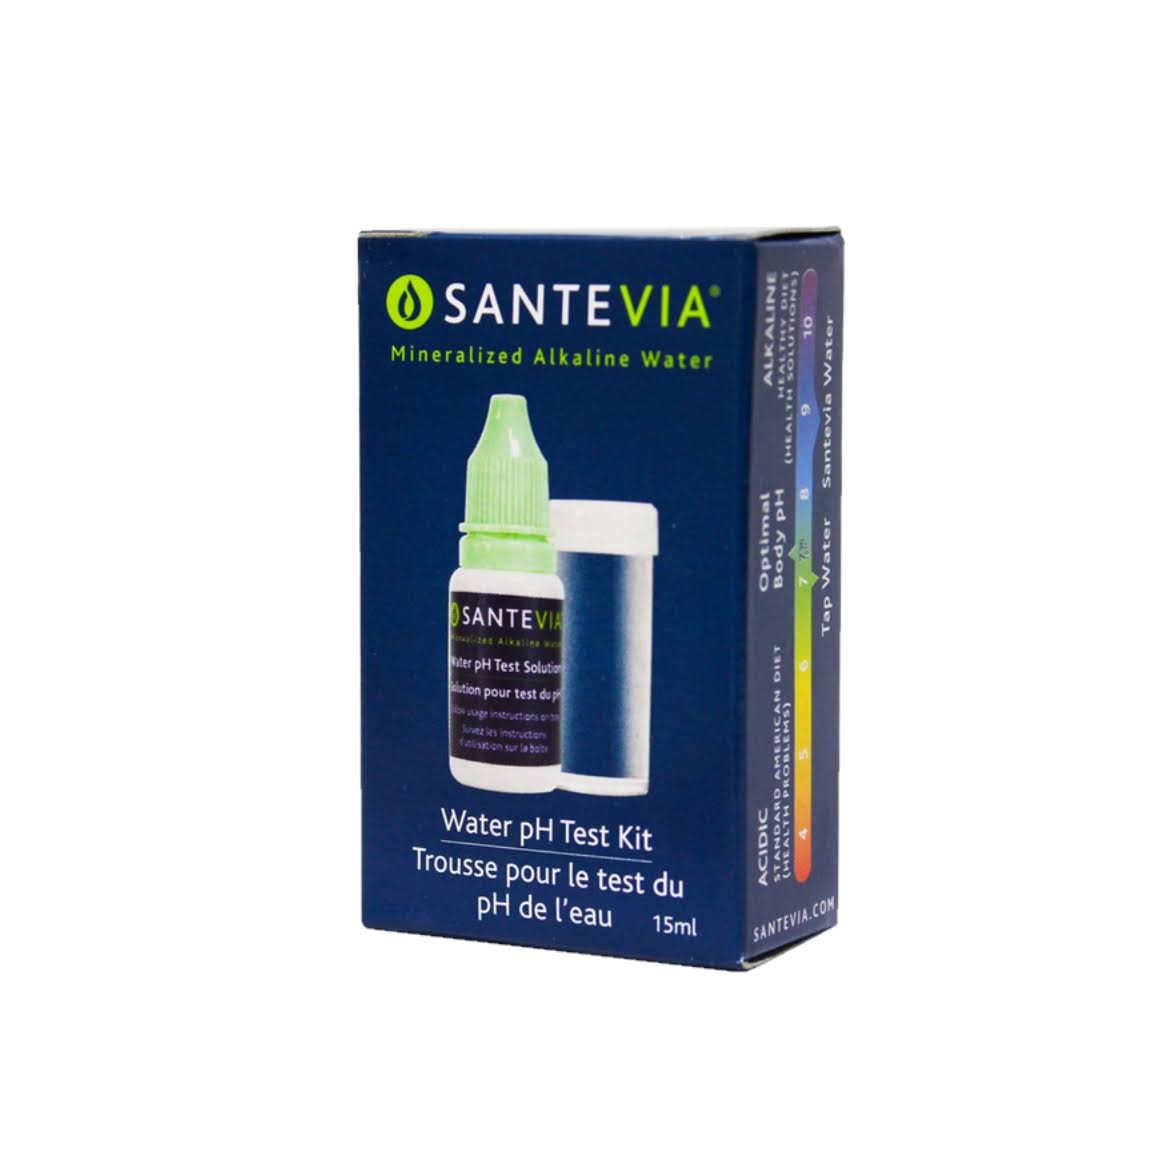 Santevia Water pH Test Kit - 15ml